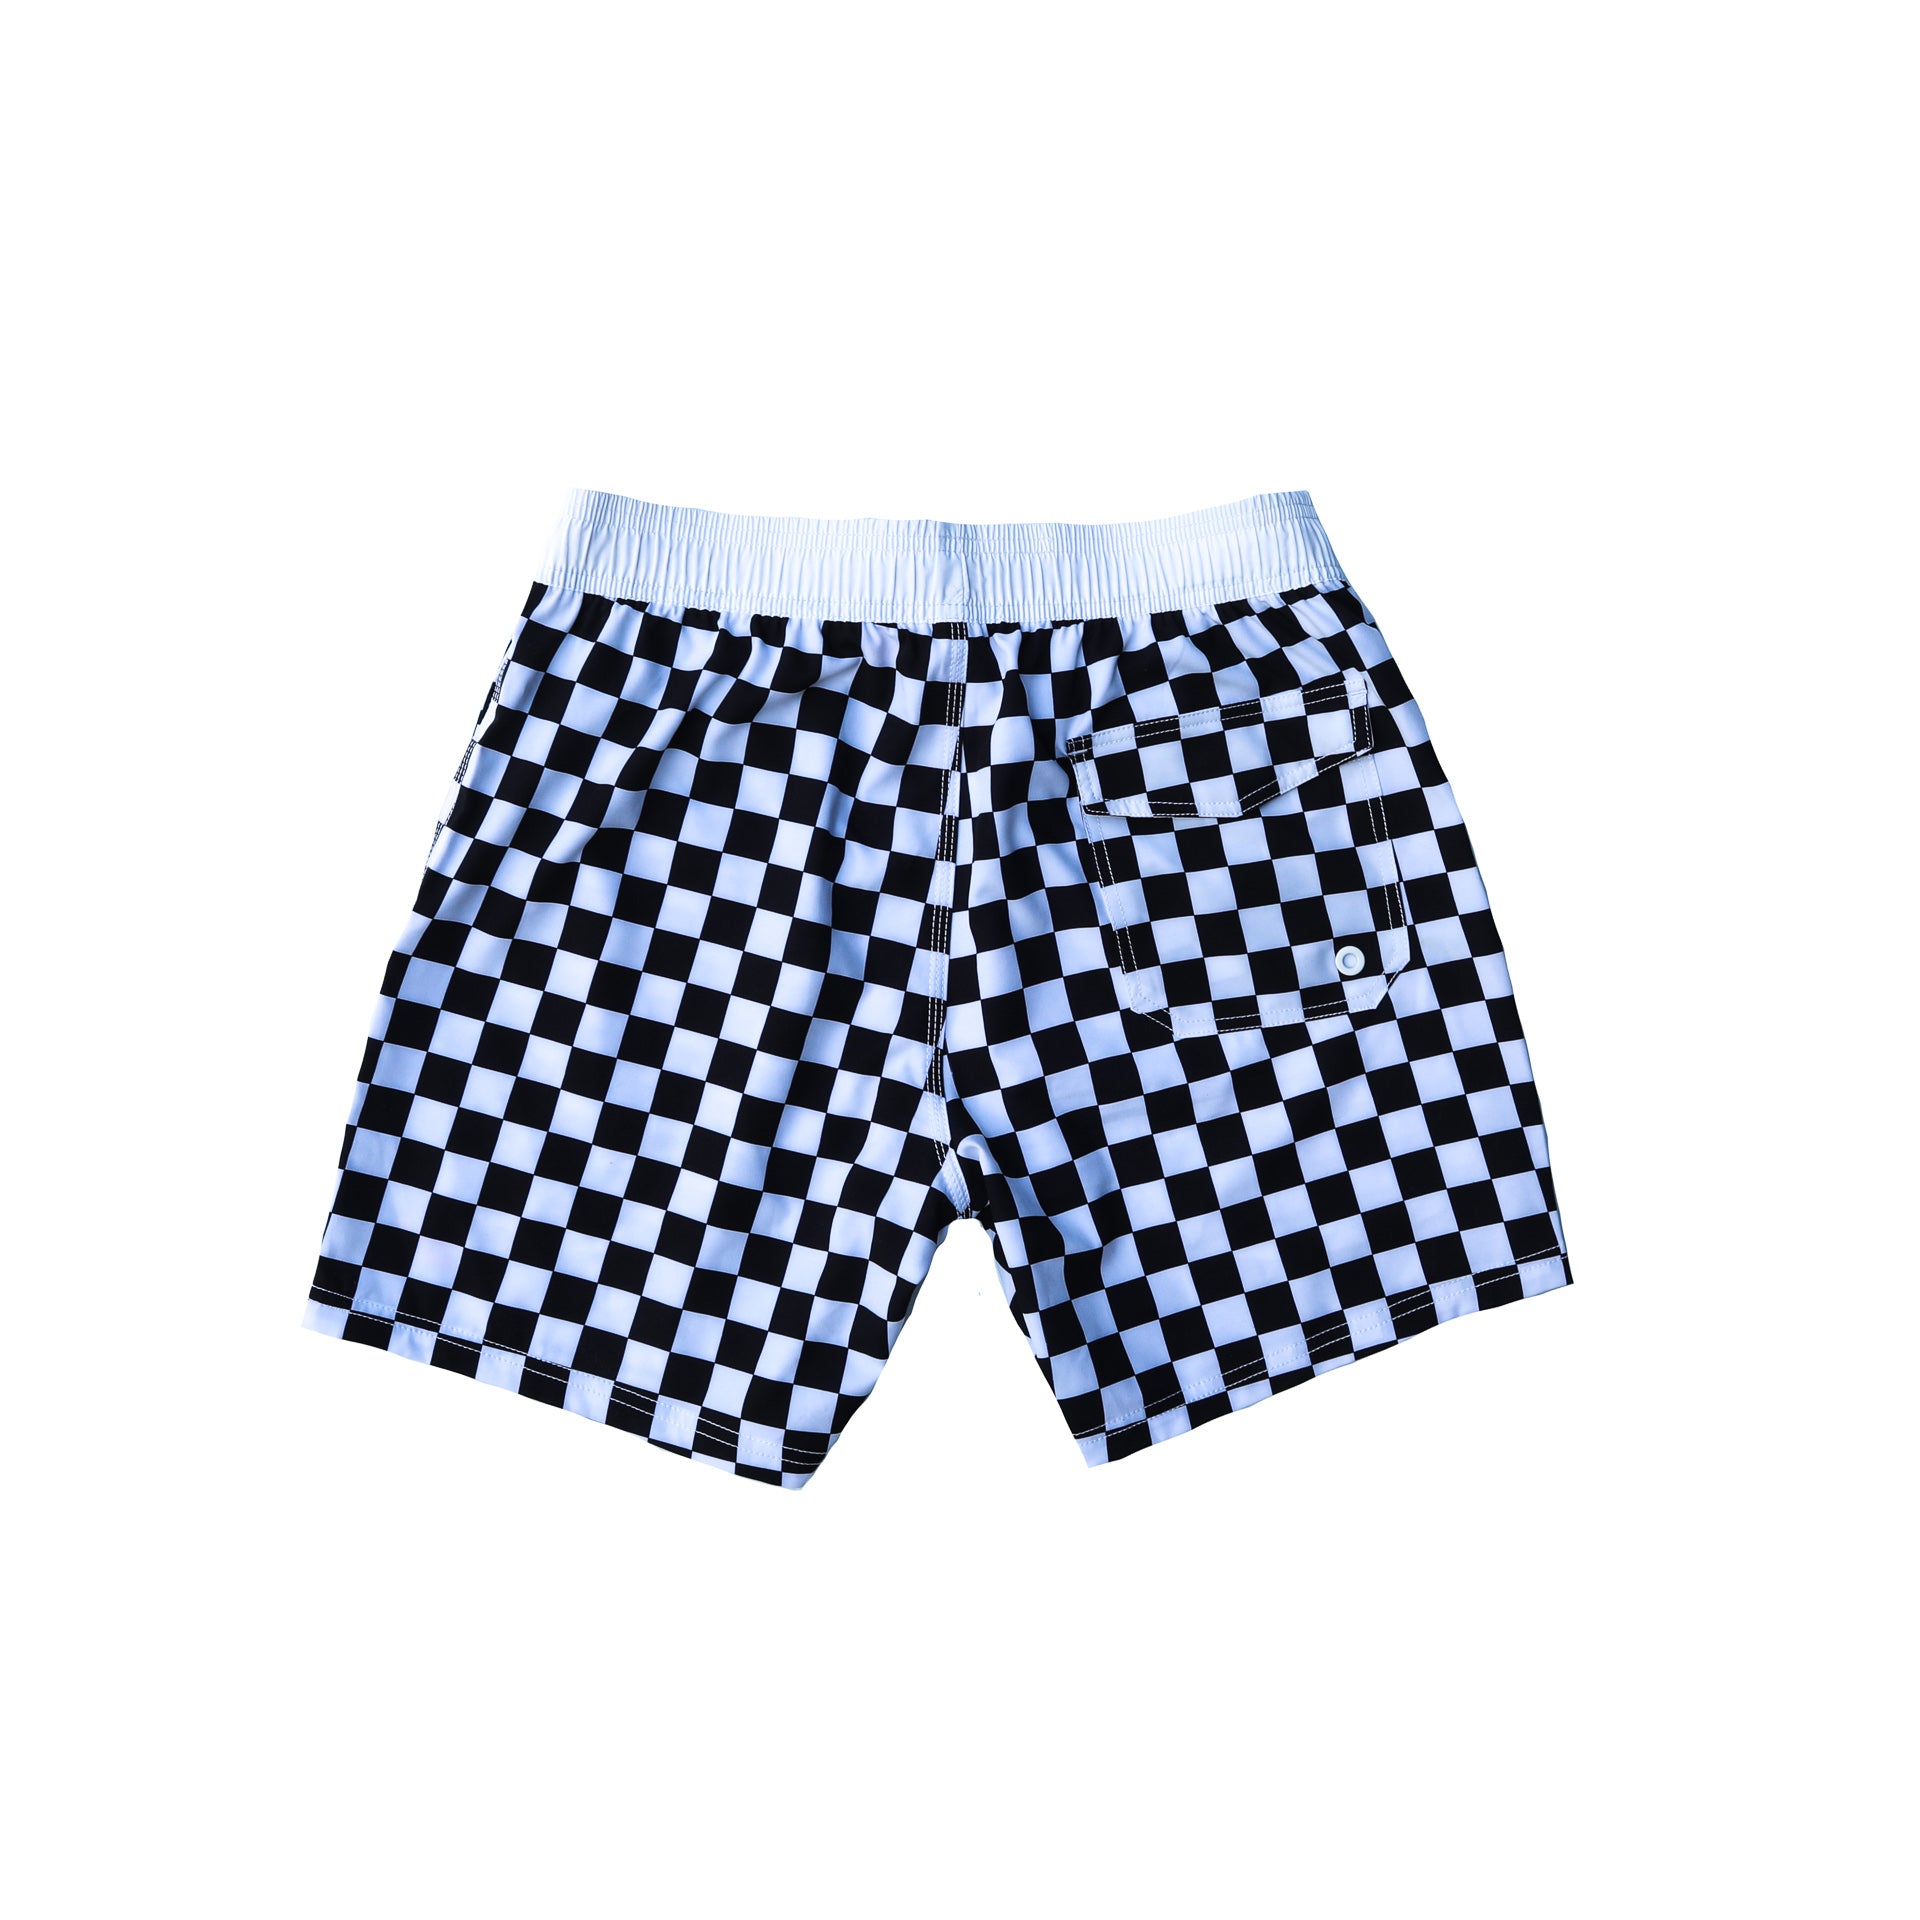 Brock & Boston - Men's Checkered Boardshorts - $52 – Rad Swim